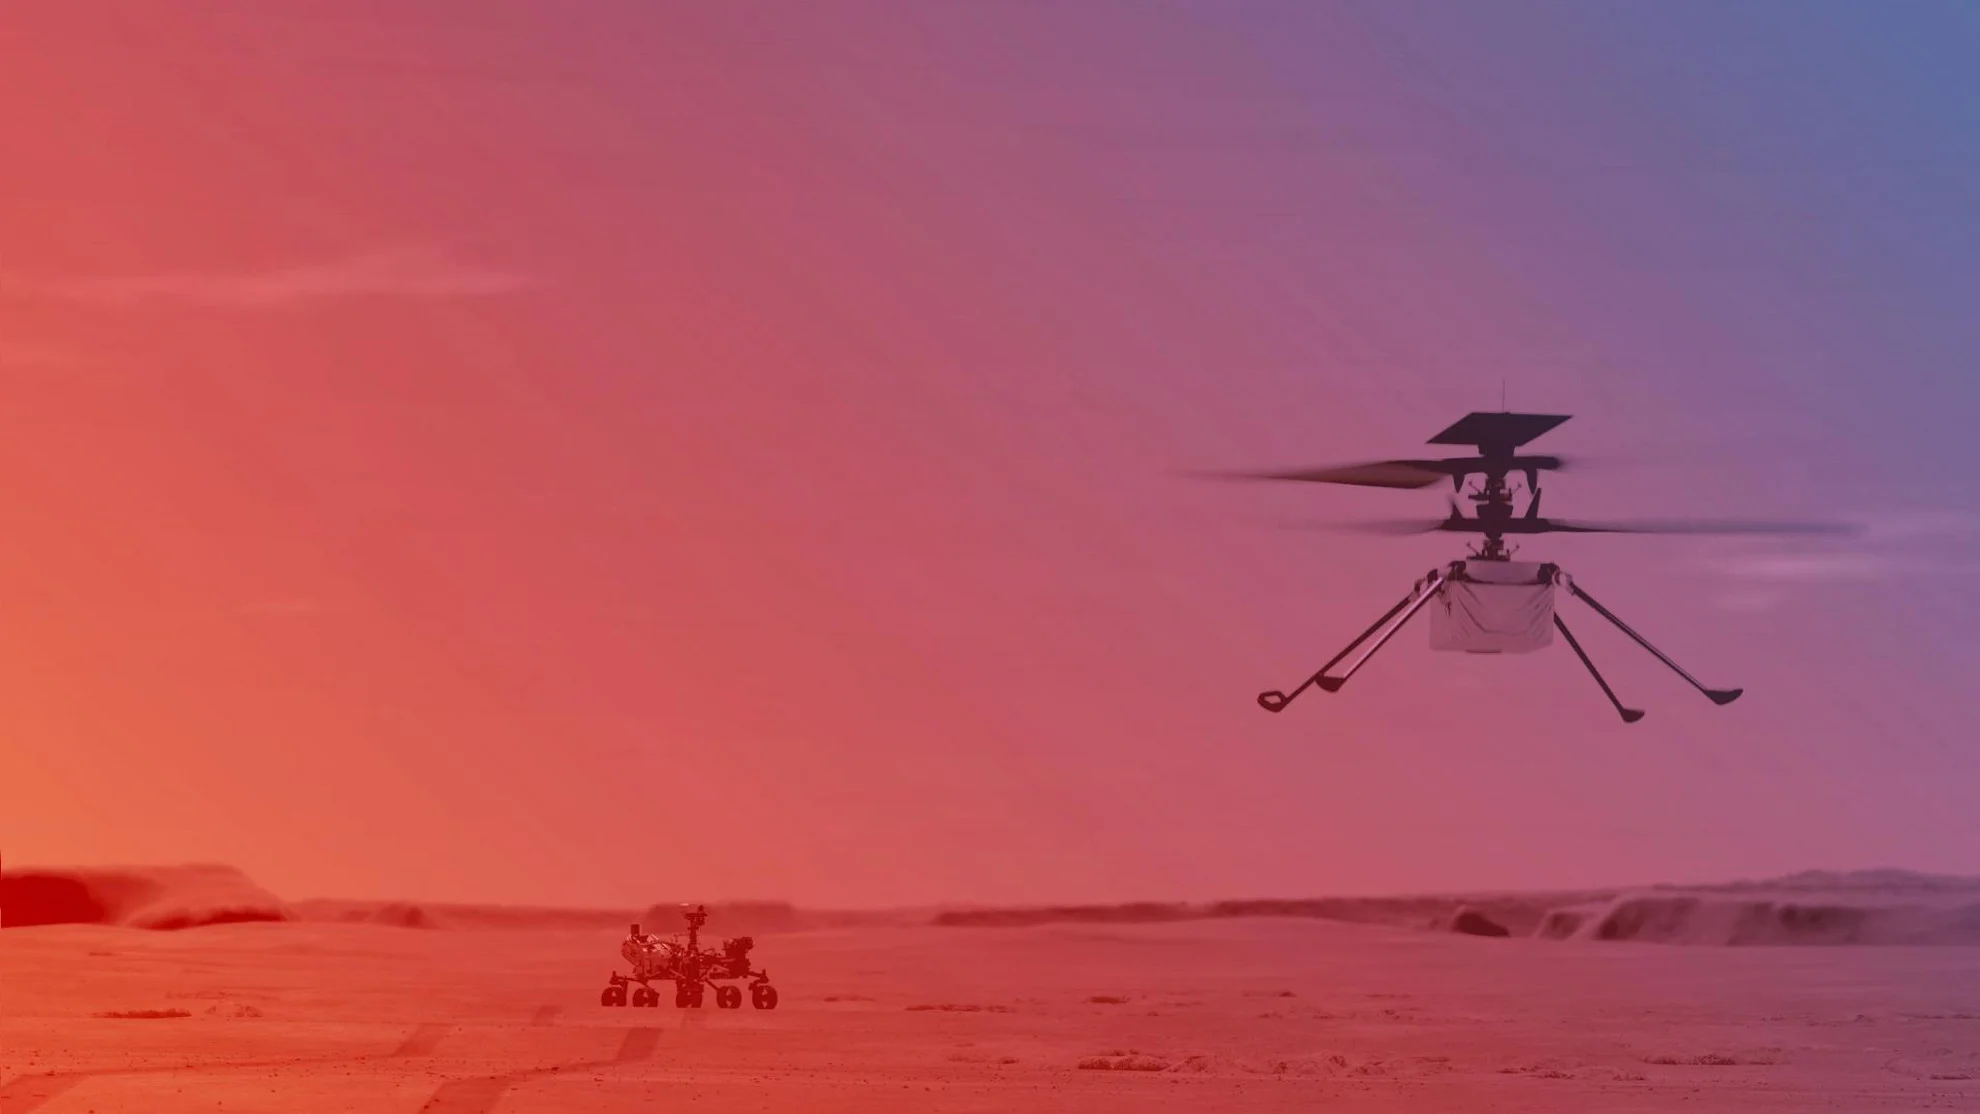 NASA's Ingenuity helicopter has taken its last flight on Mars